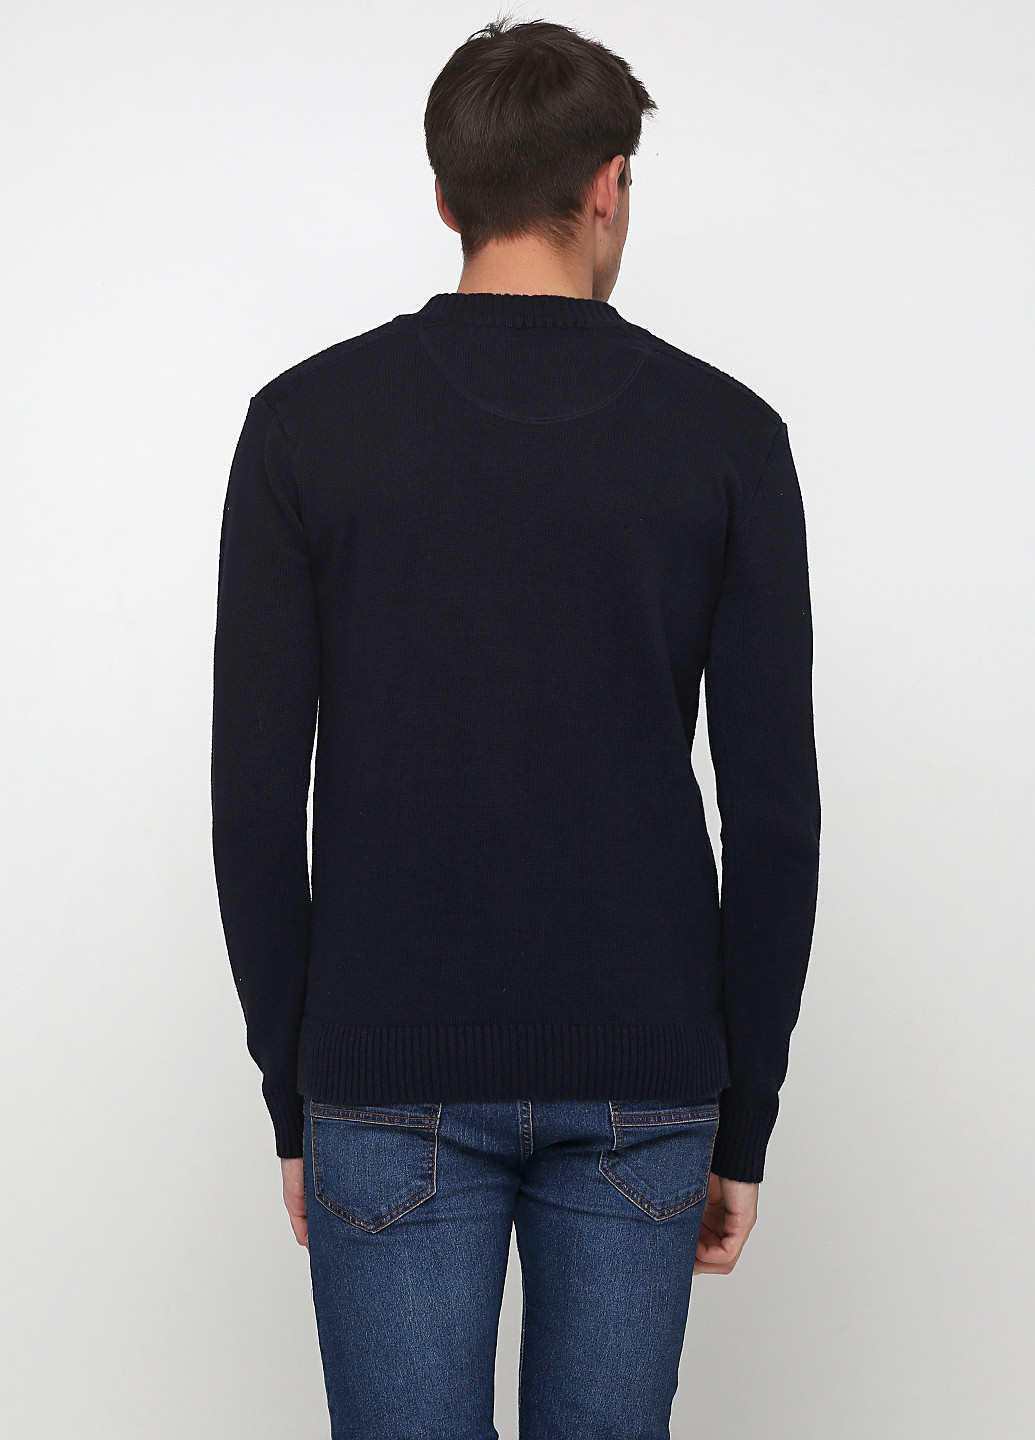 Темно-синий демисезонный пуловер пуловер Brave Soul